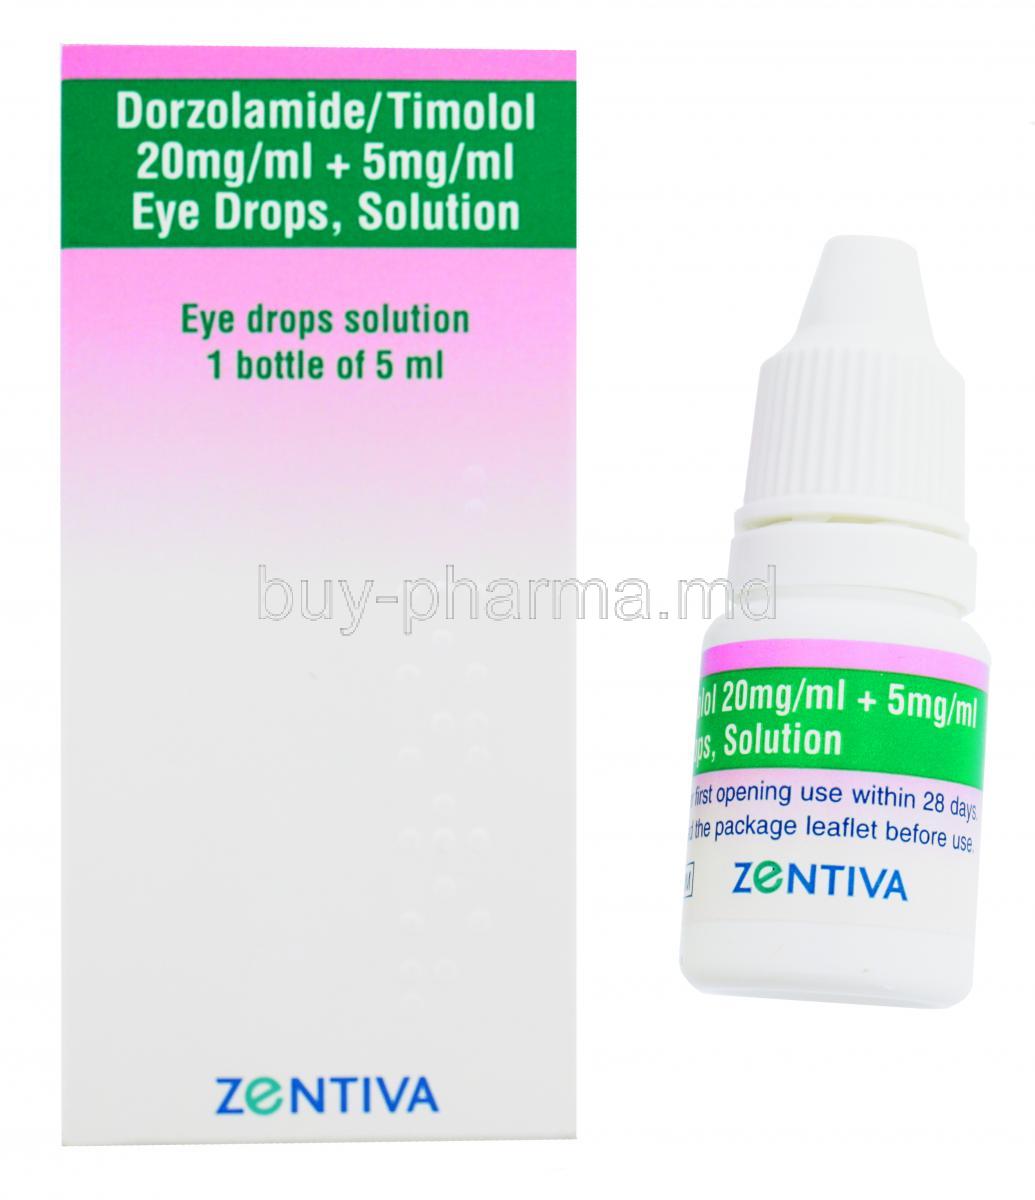 Dorzolamide/ Timolol Eyedrop , 20mg/ml, 5mg/ml, 5ml, Zentiva, Box and bottle front presentation